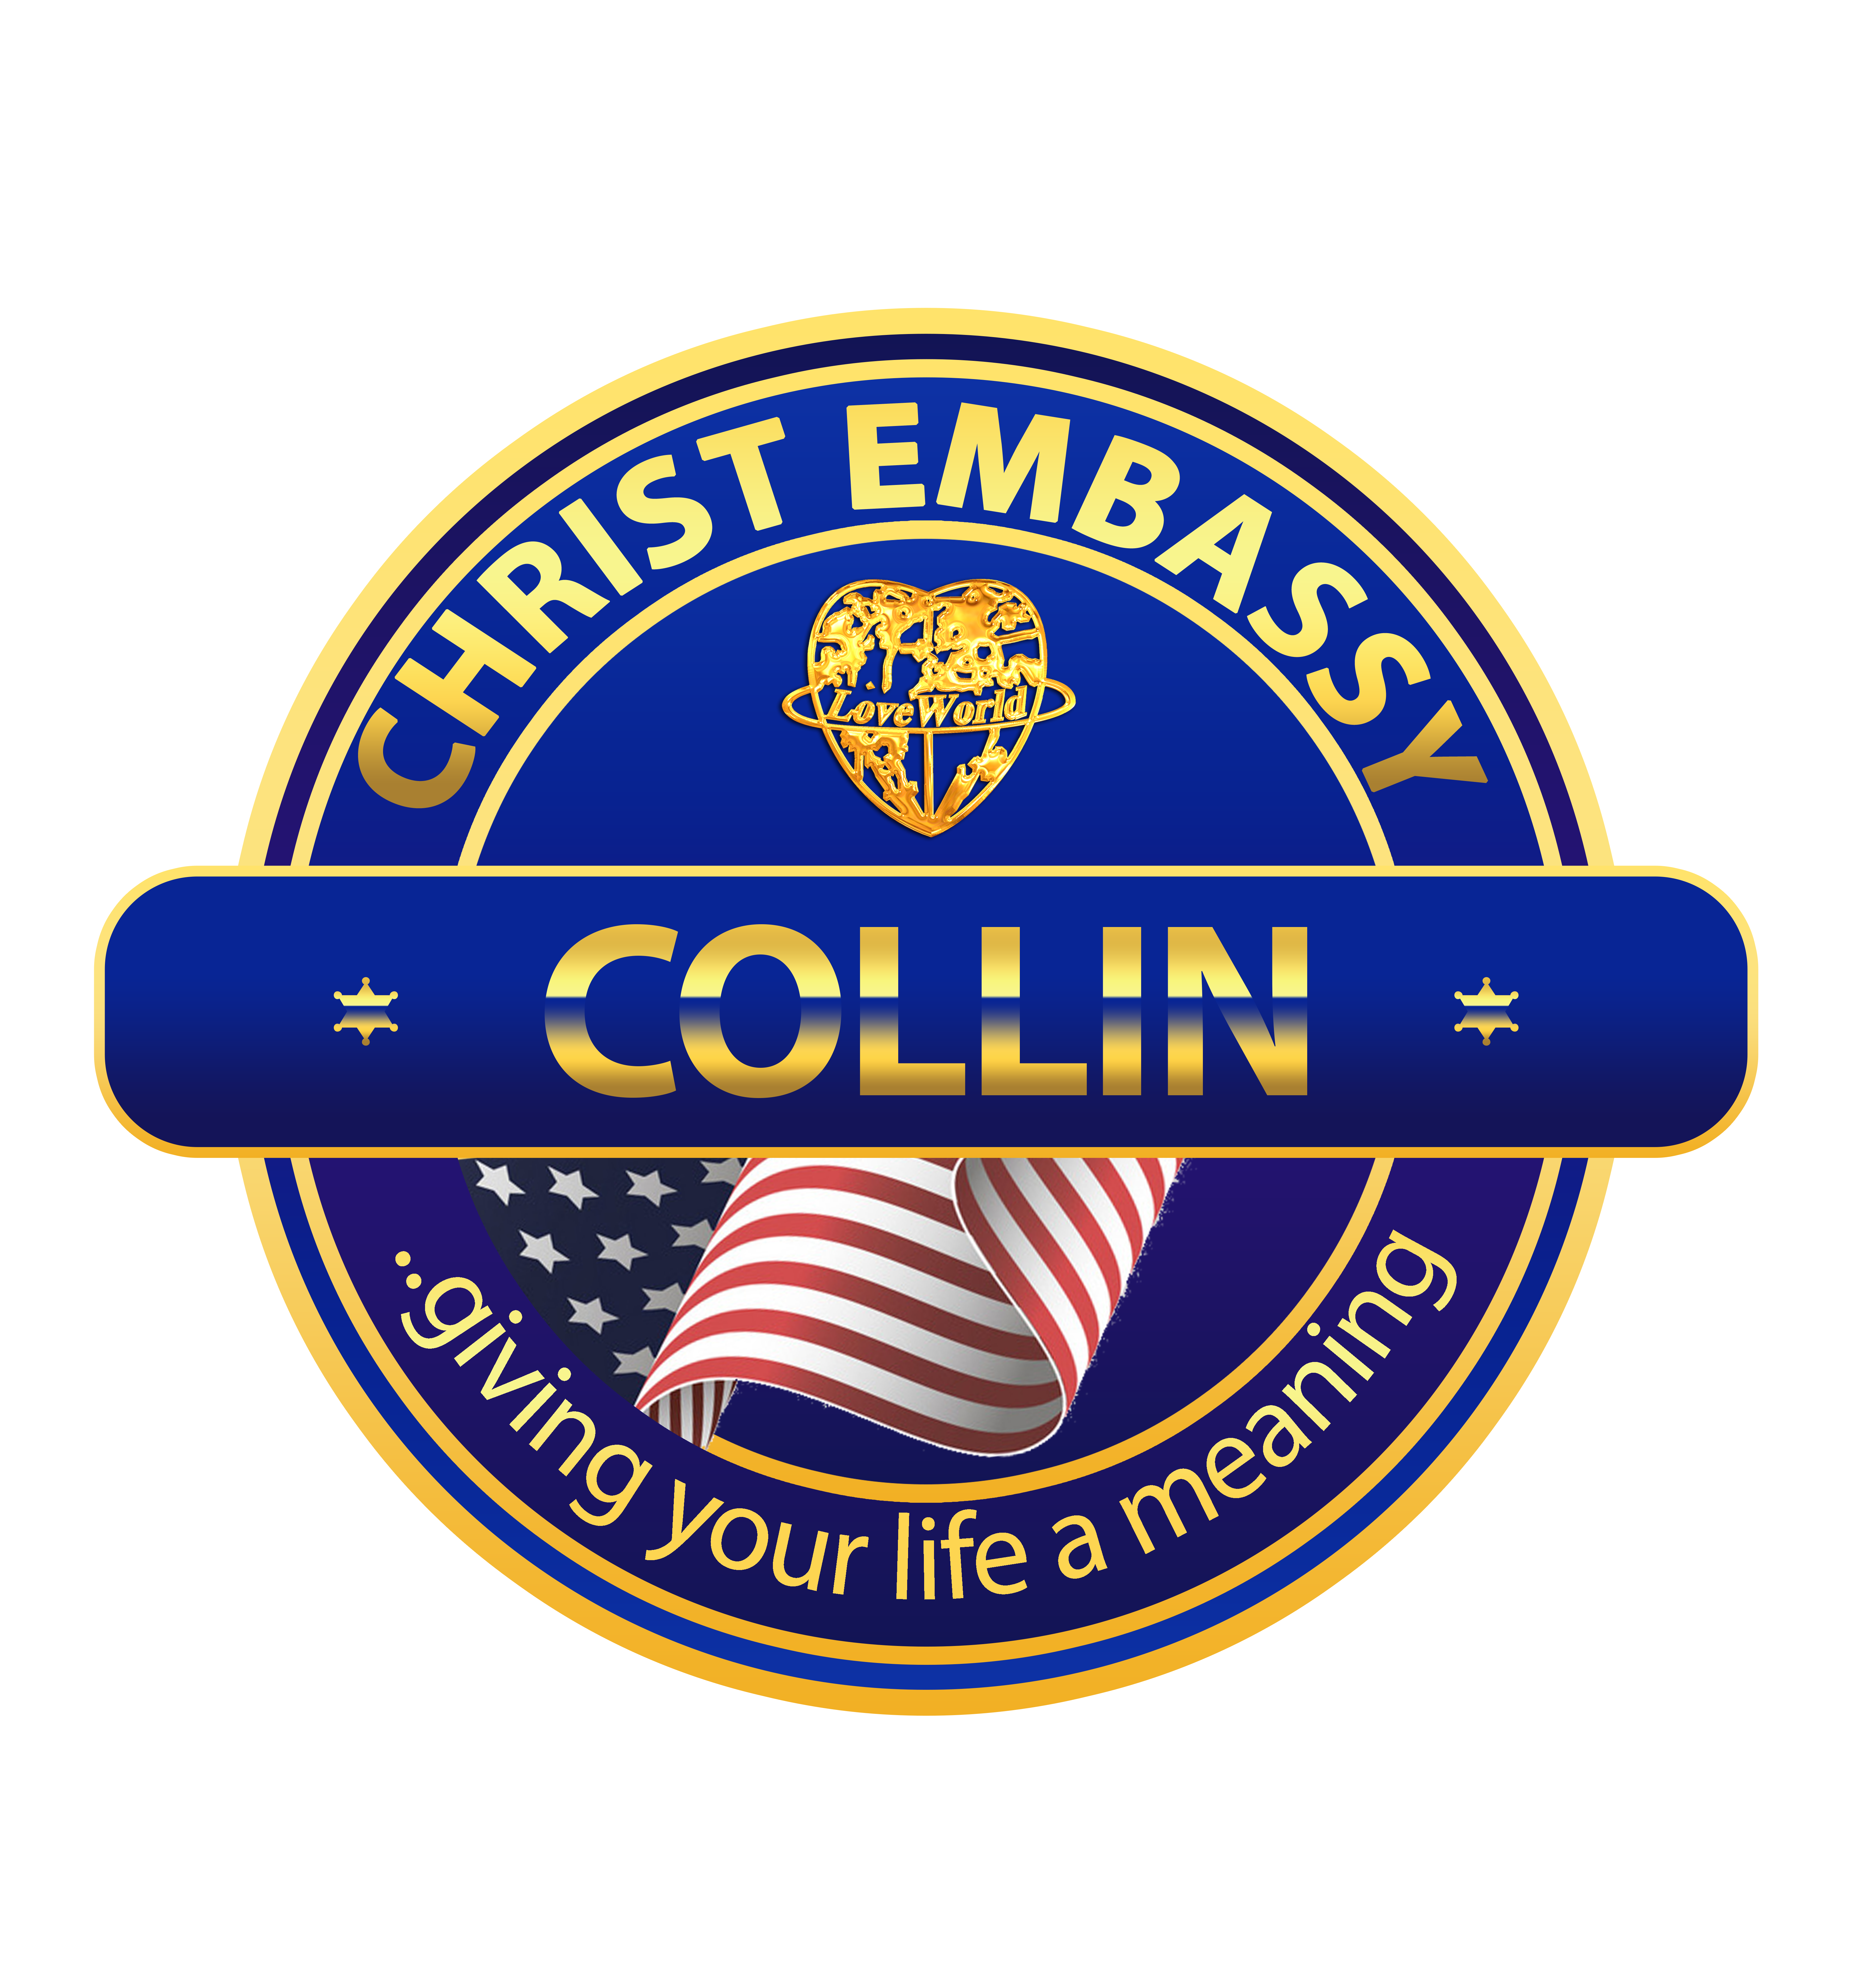 Christ Embassy Collin